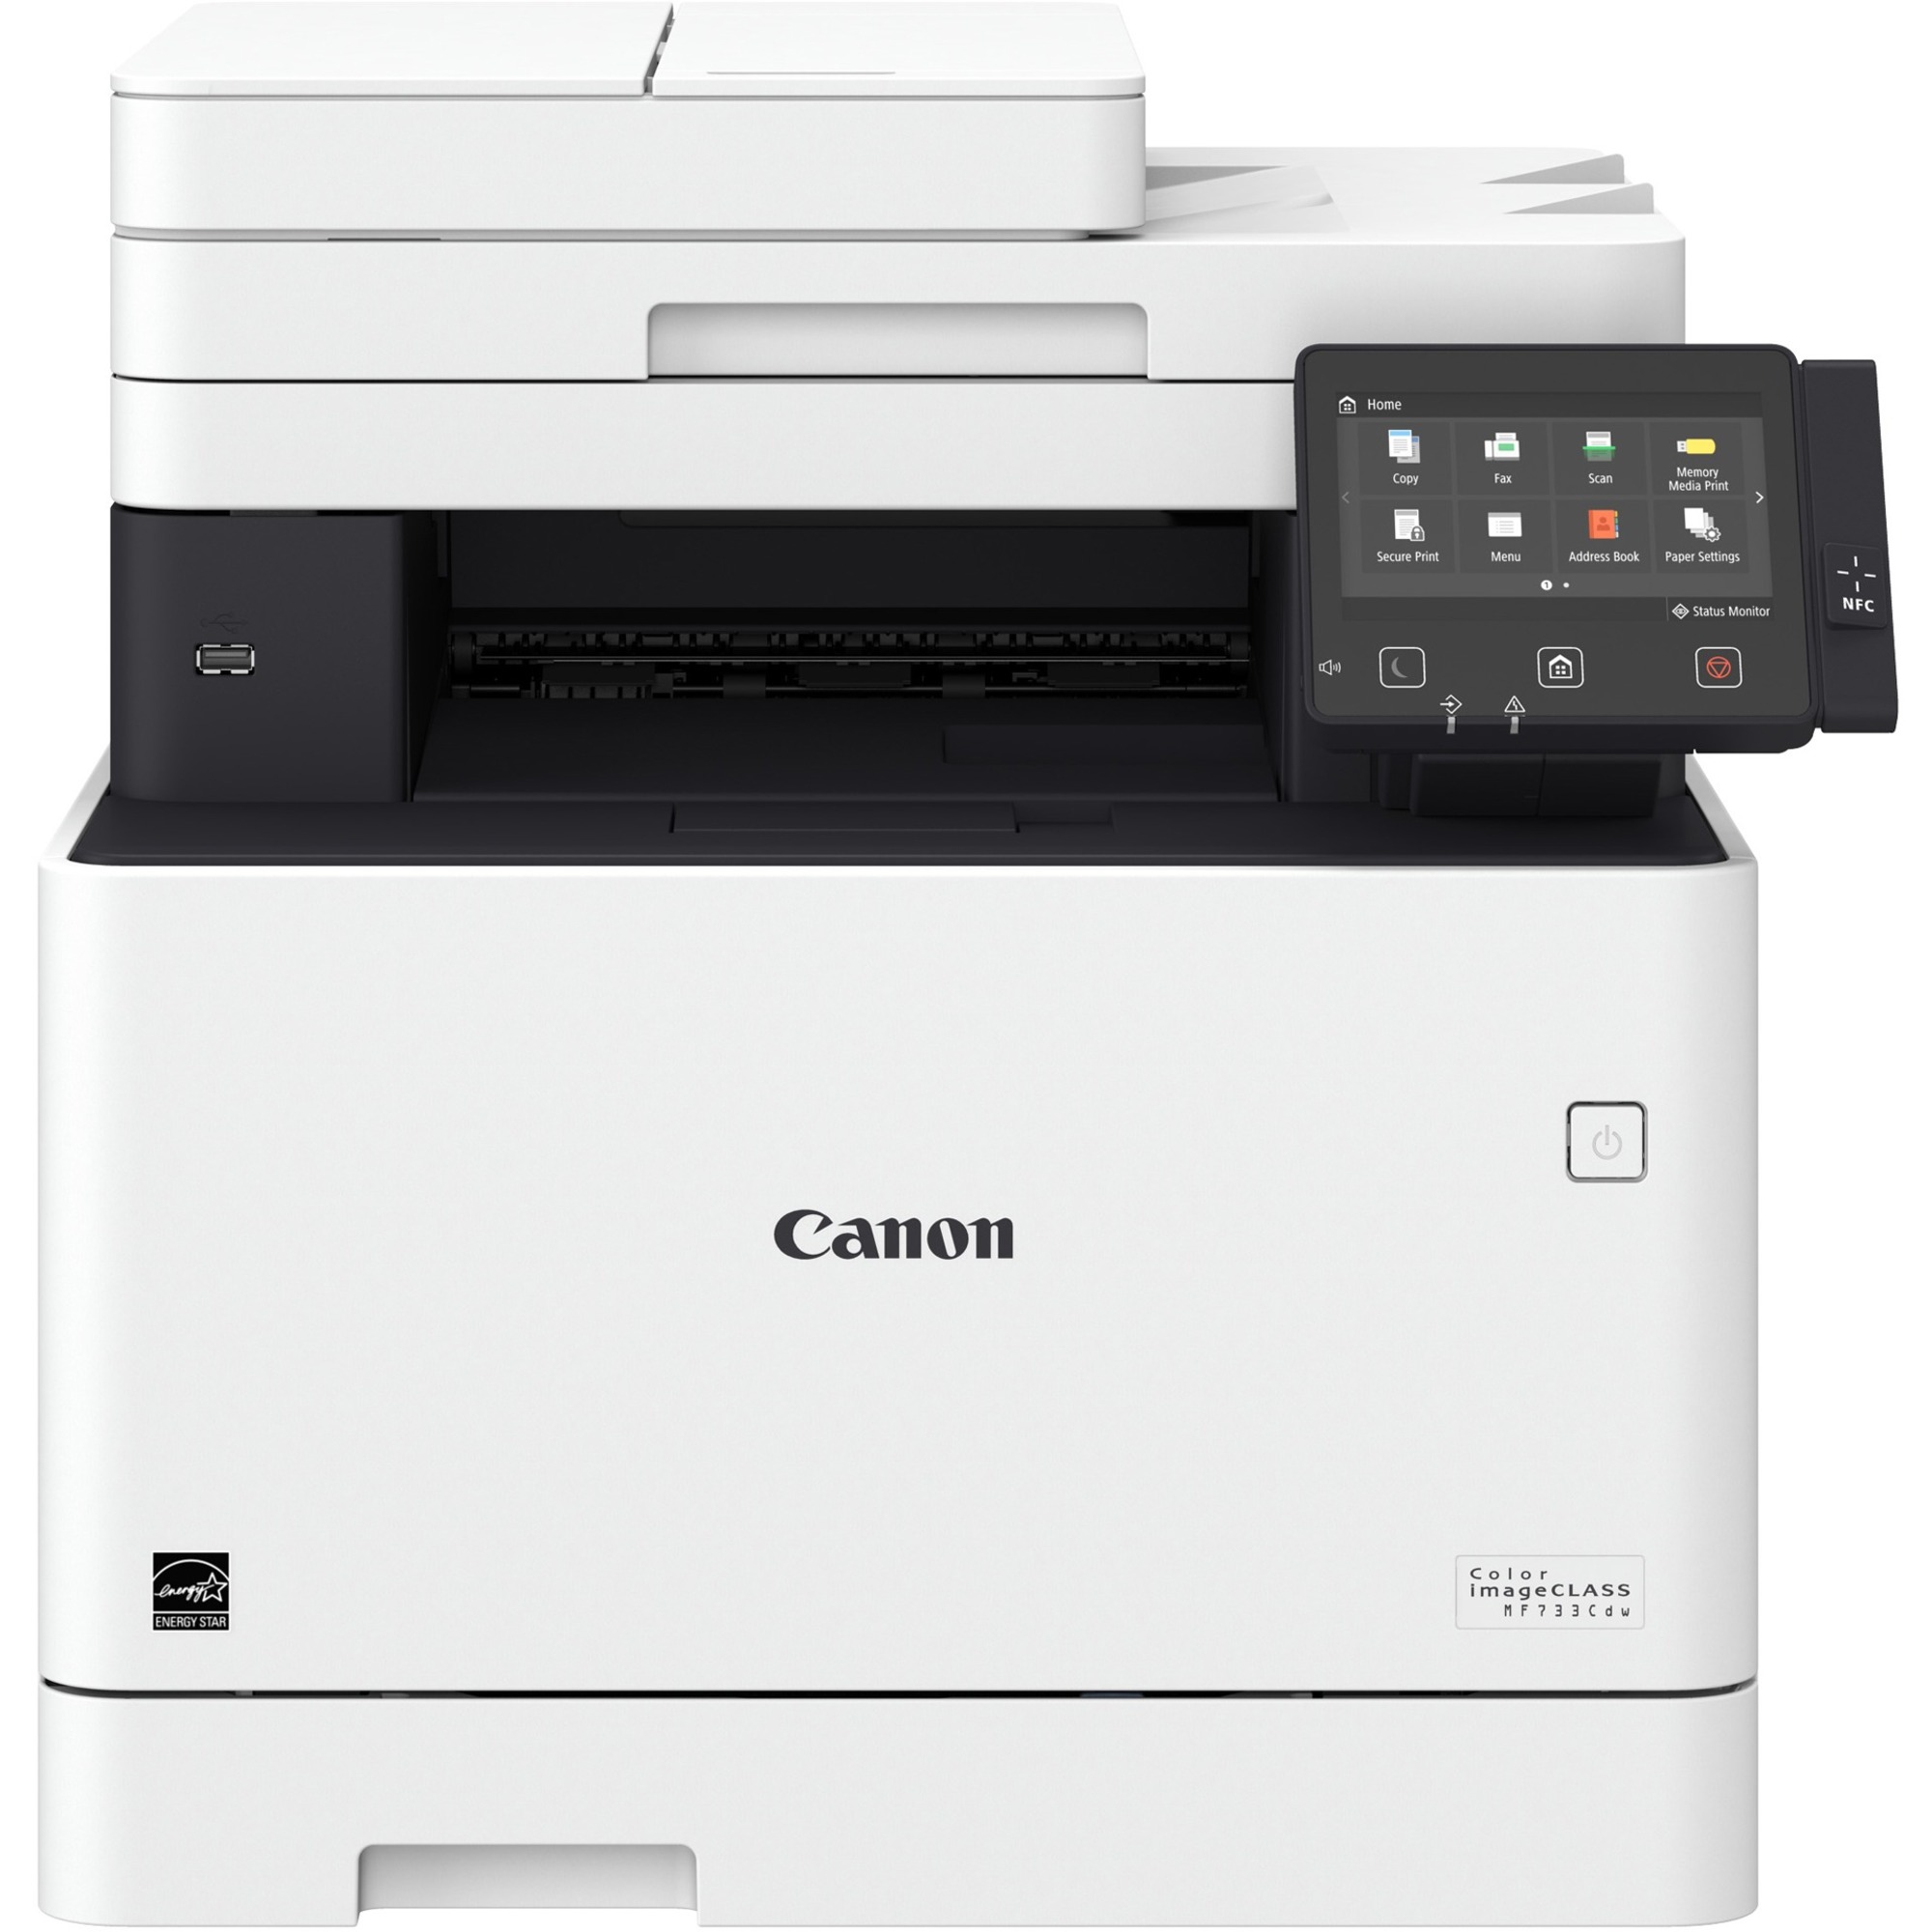 Canon laser printer ink cartridges